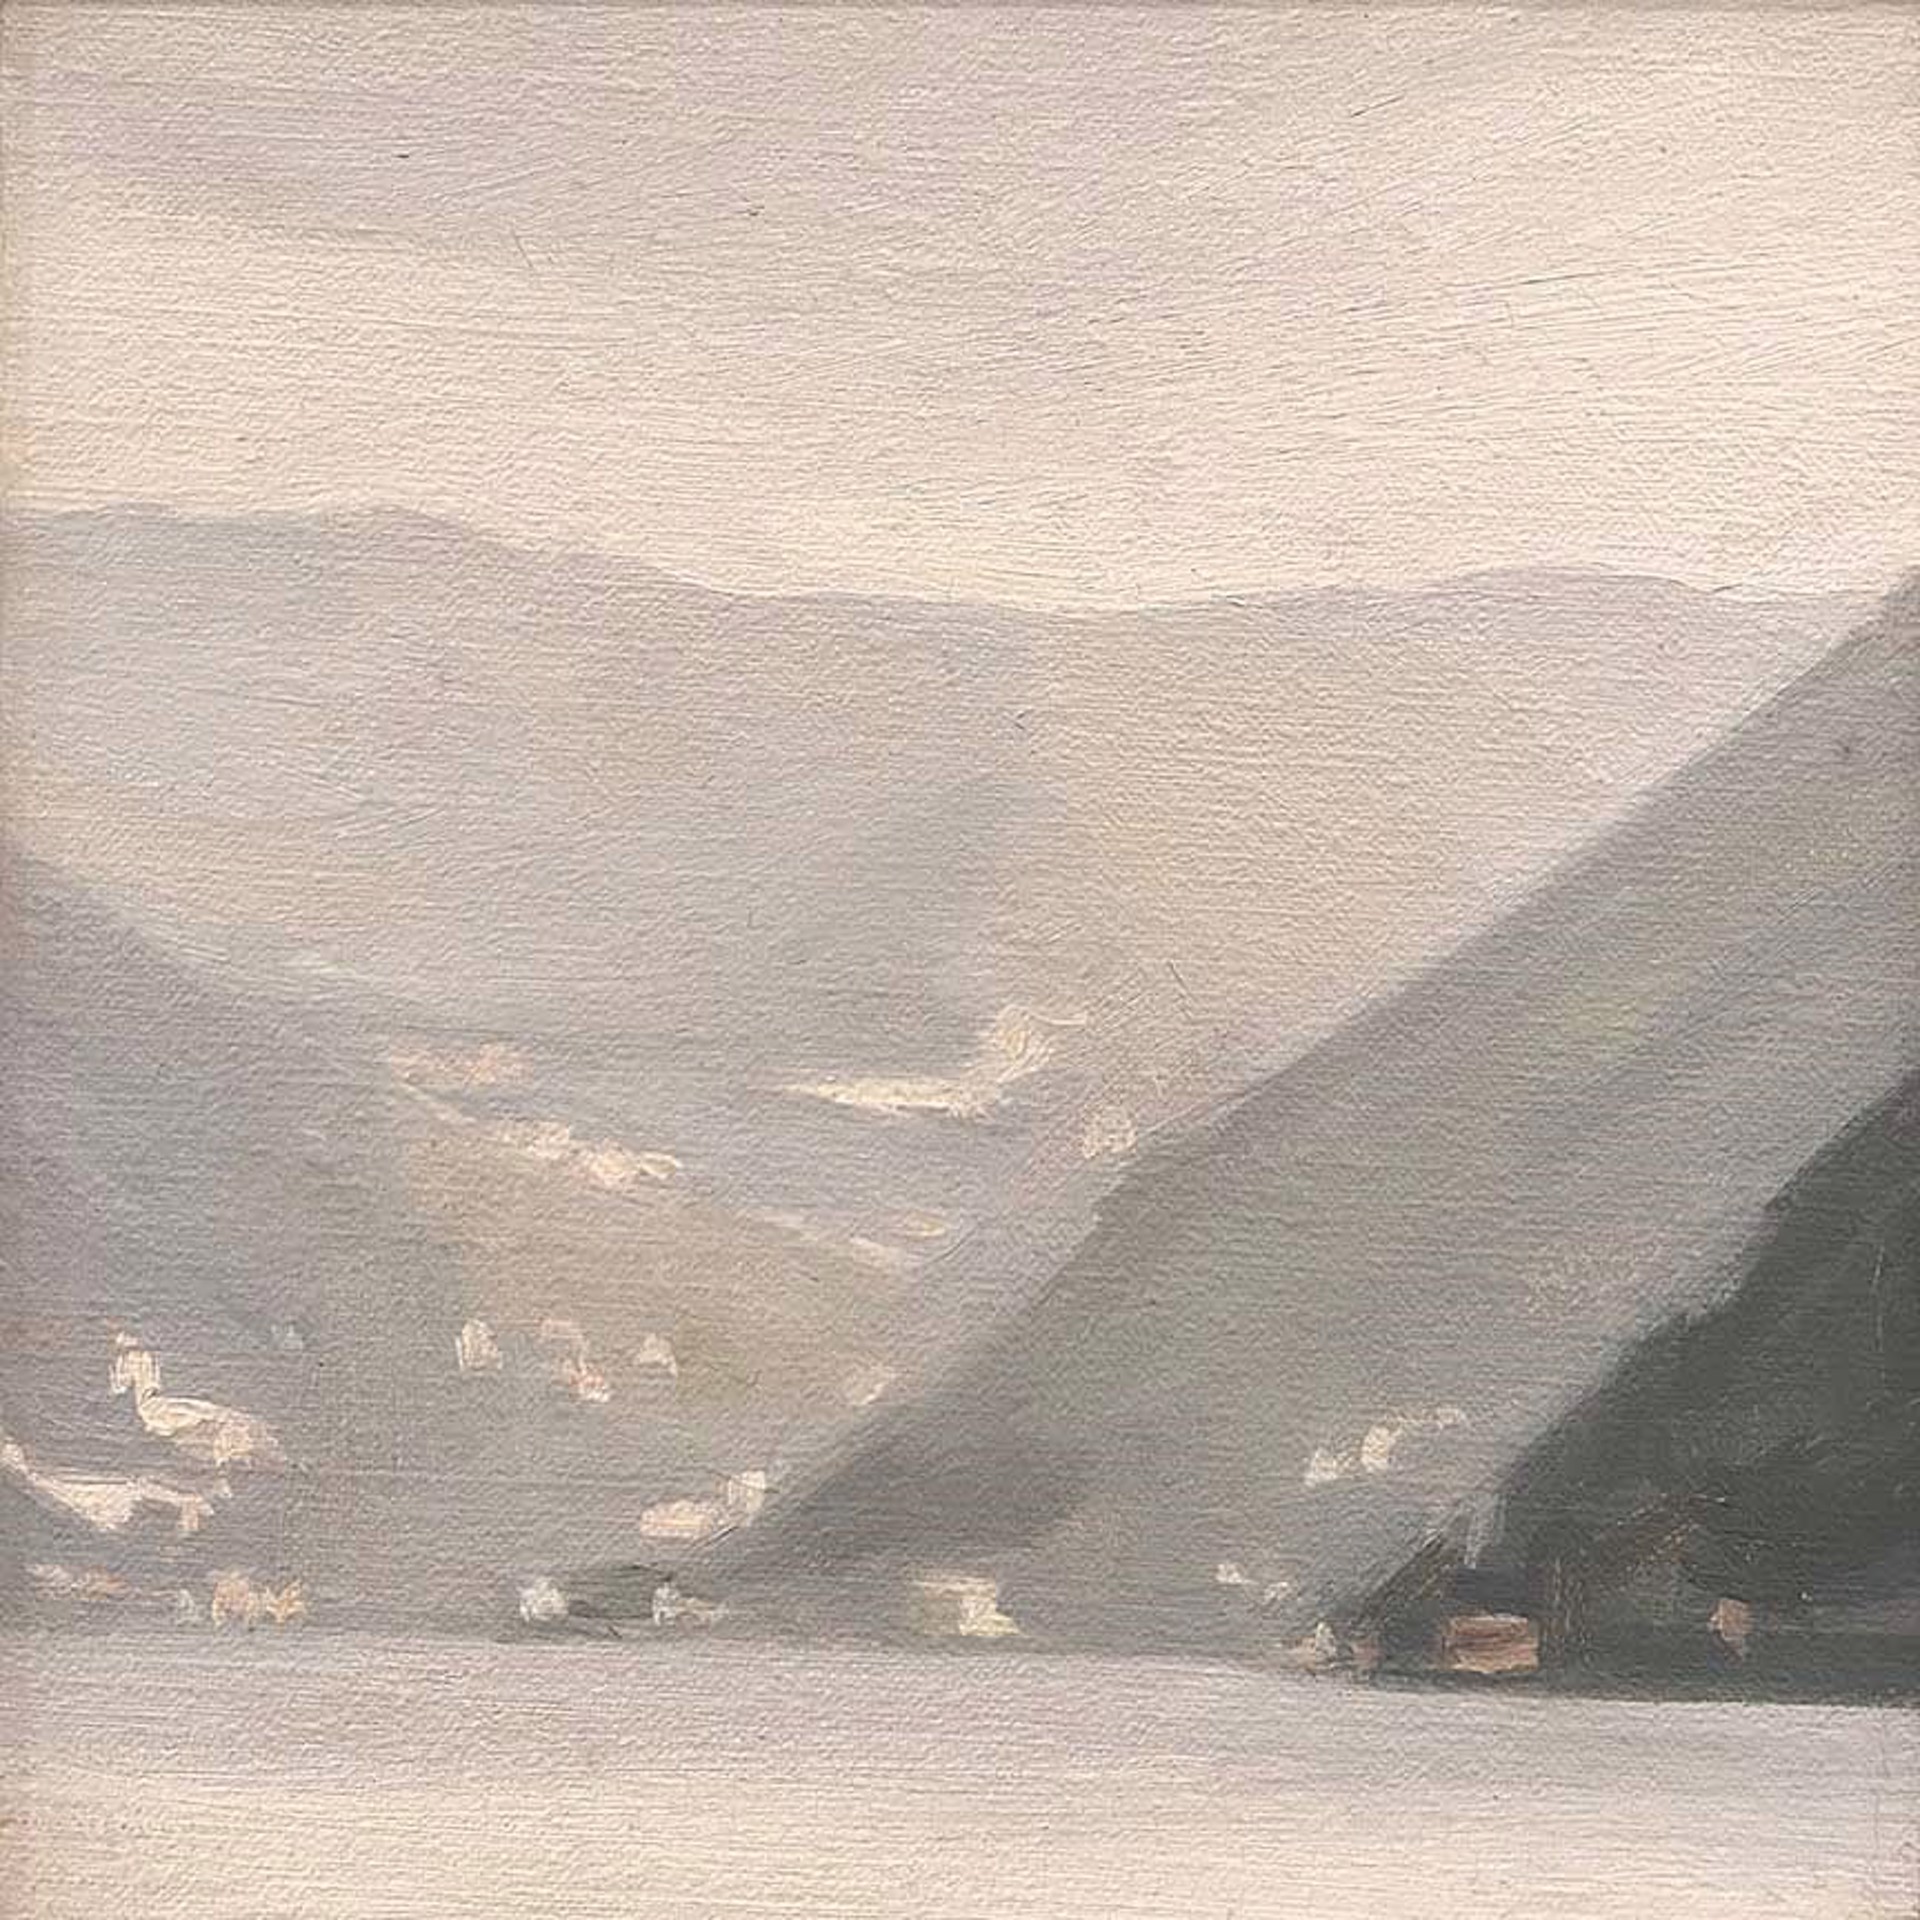 Lake Como by Diana Horowitz